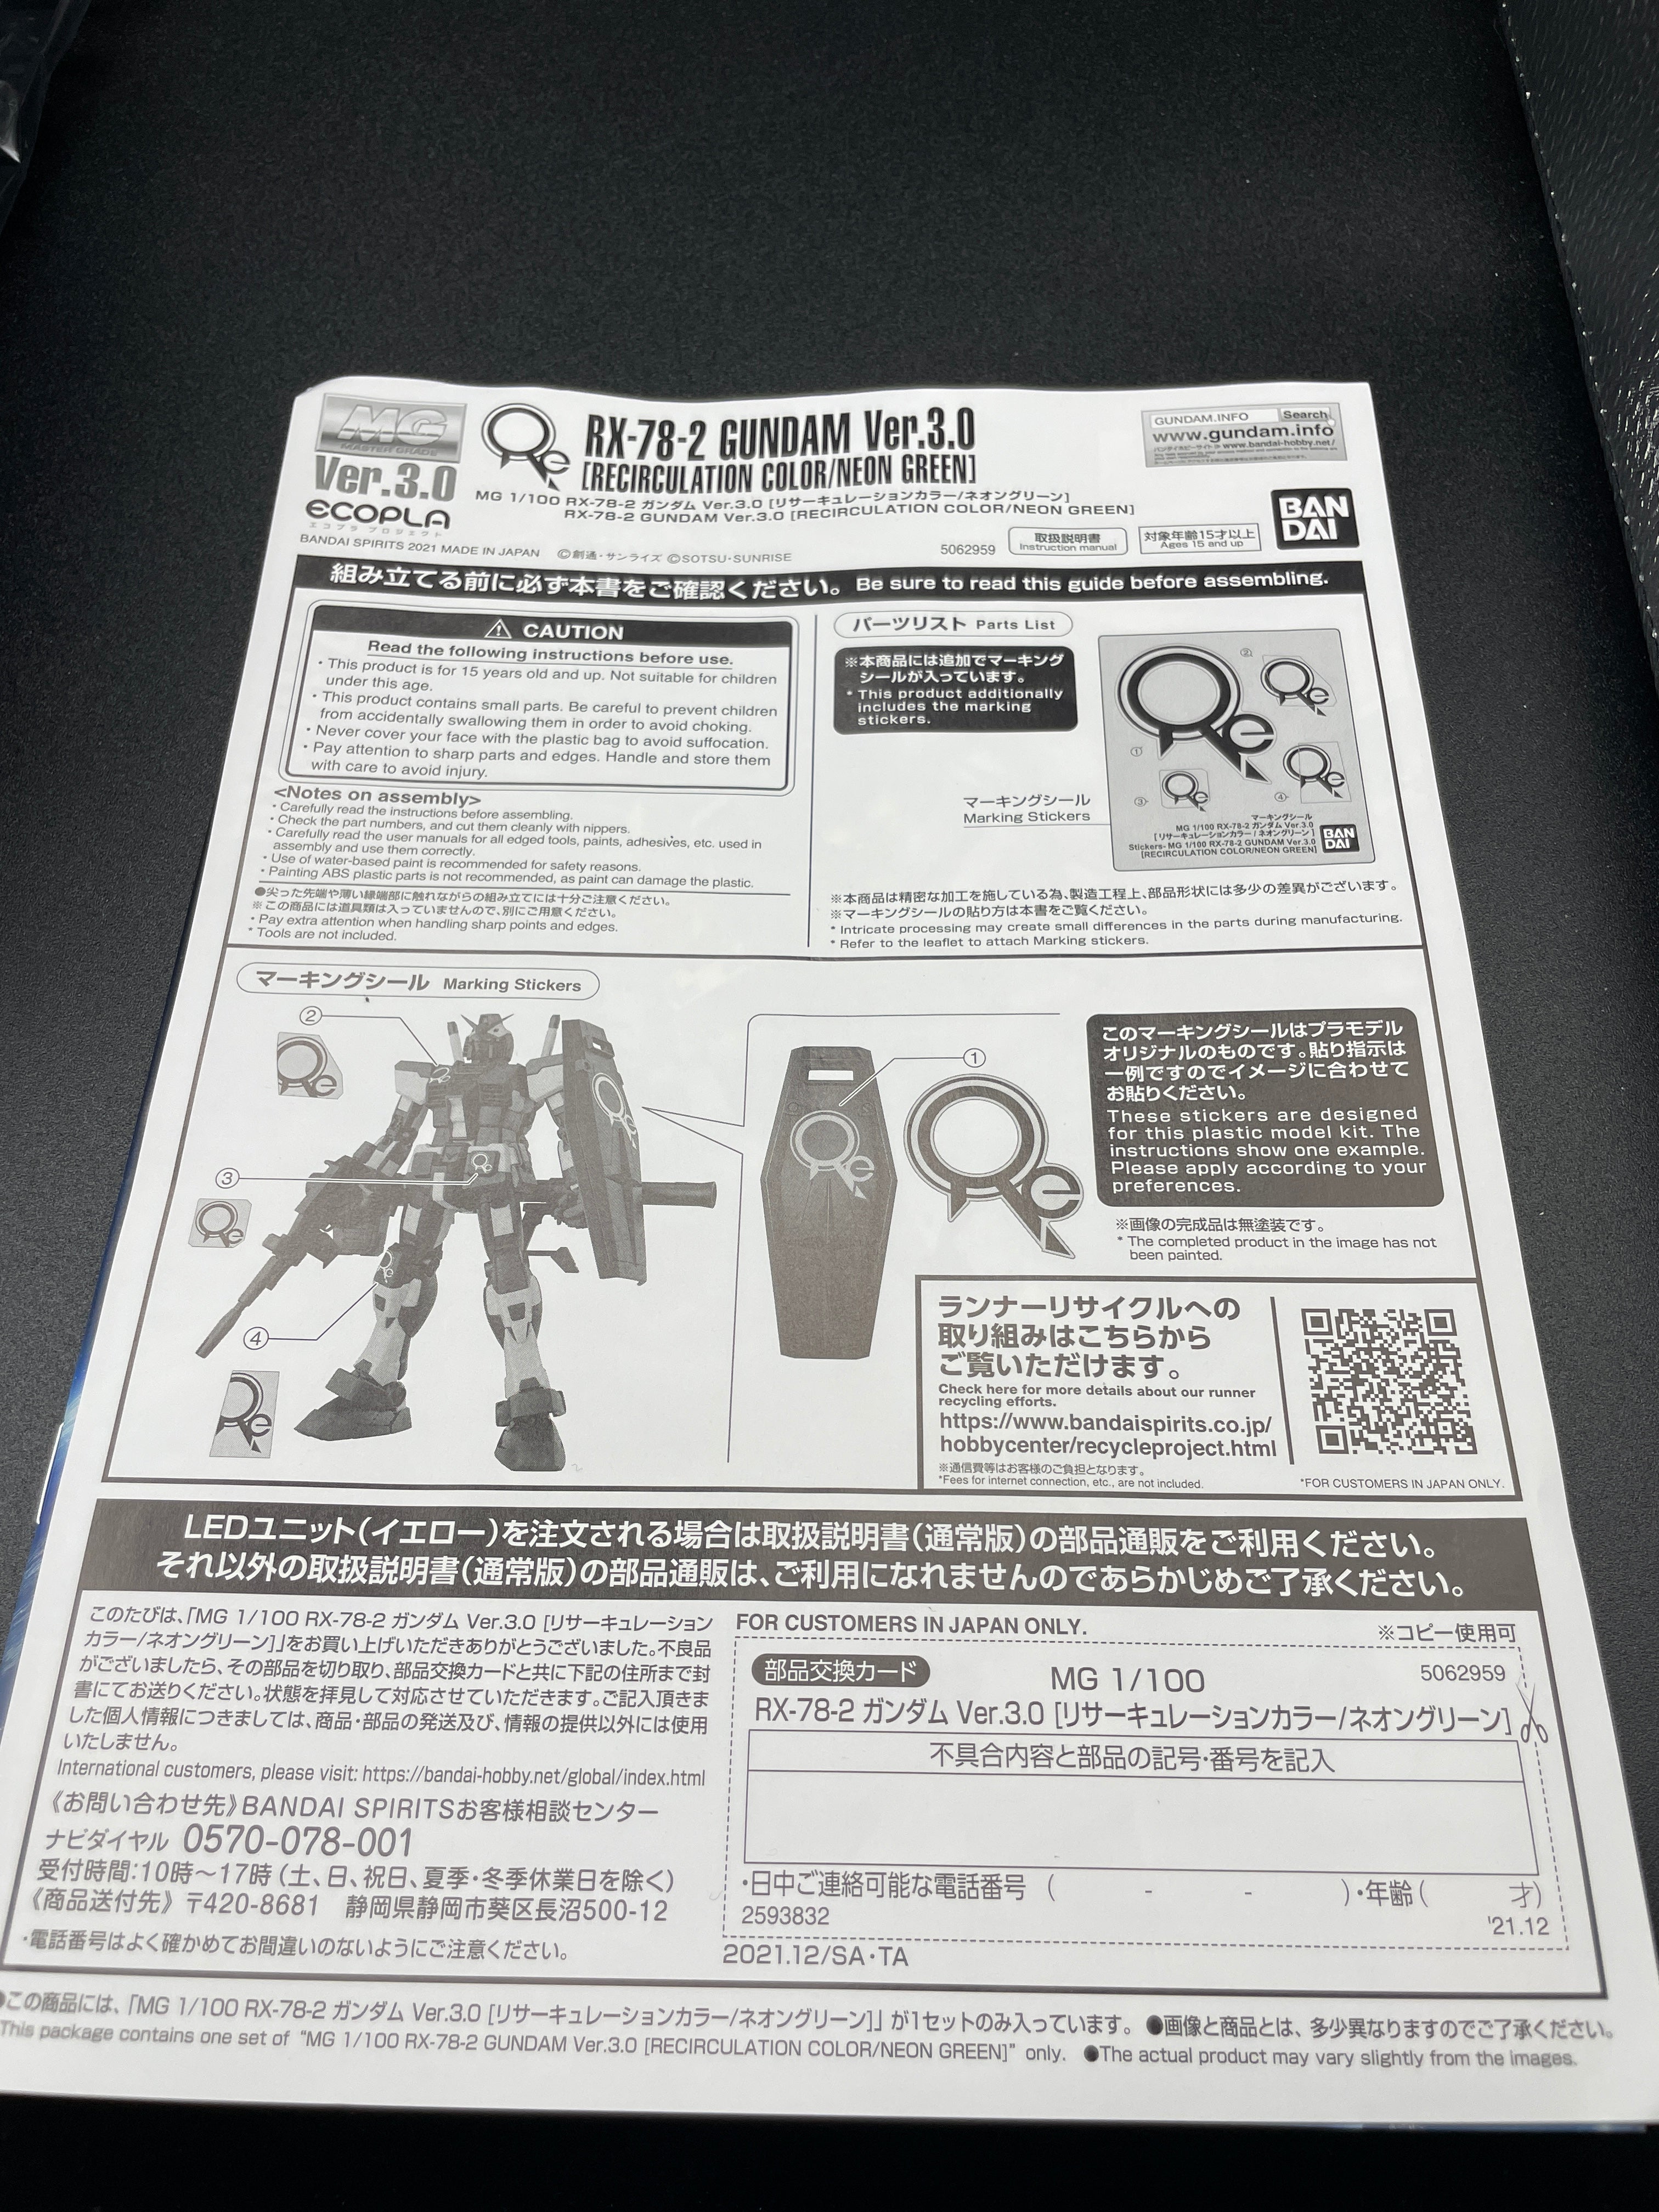 Mobile Suit Gundam 1/100 RX-78-2 Ver 3 MG Recirculation Color Neon Green Import